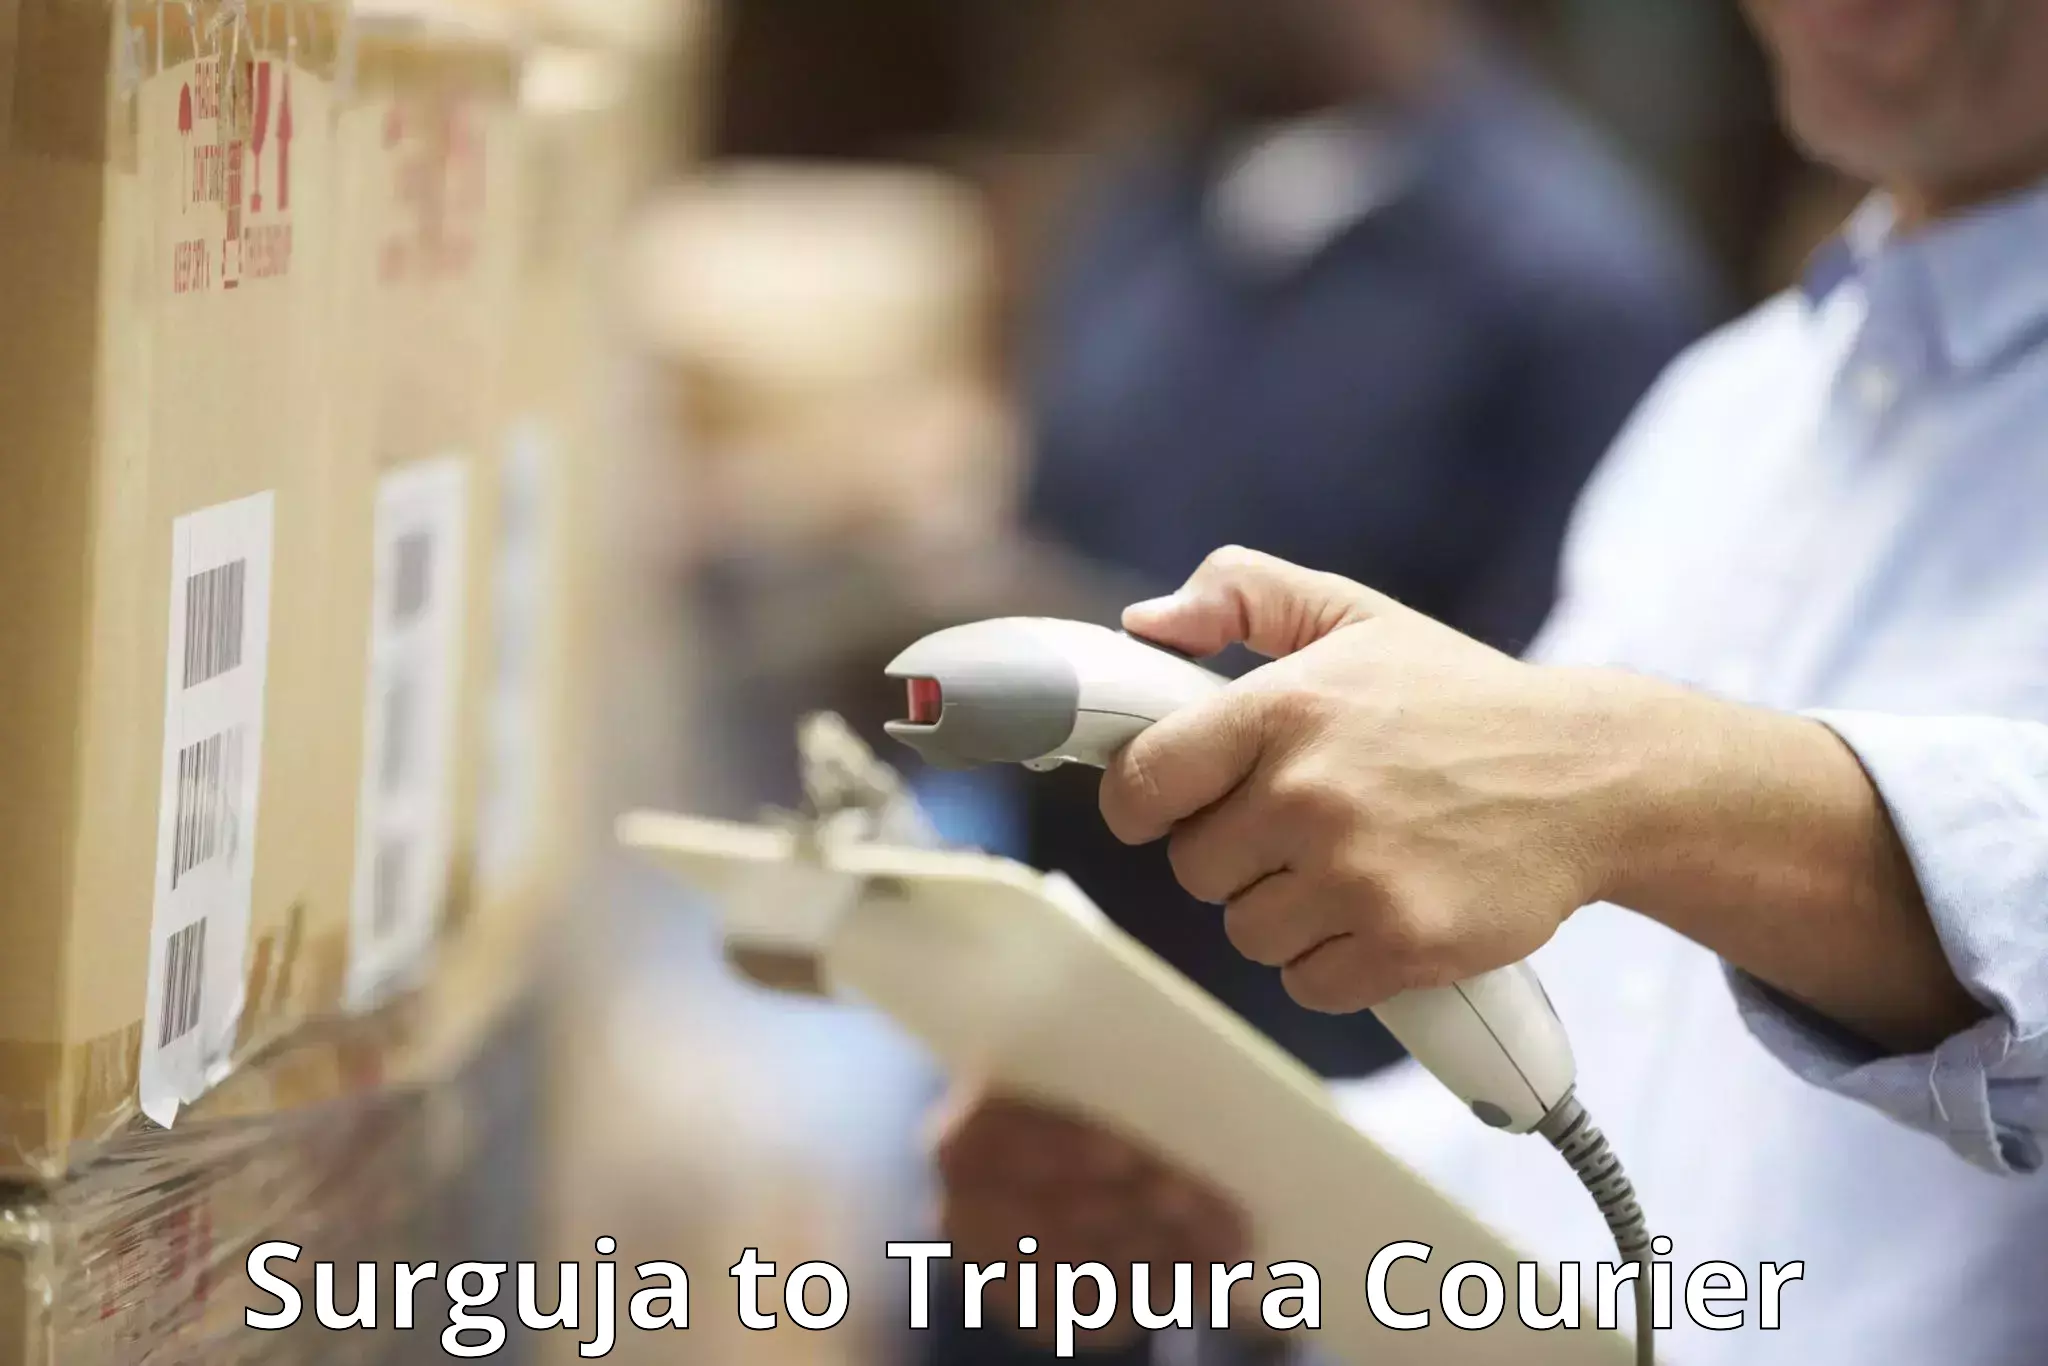 Baggage transport network Surguja to Udaipur Tripura